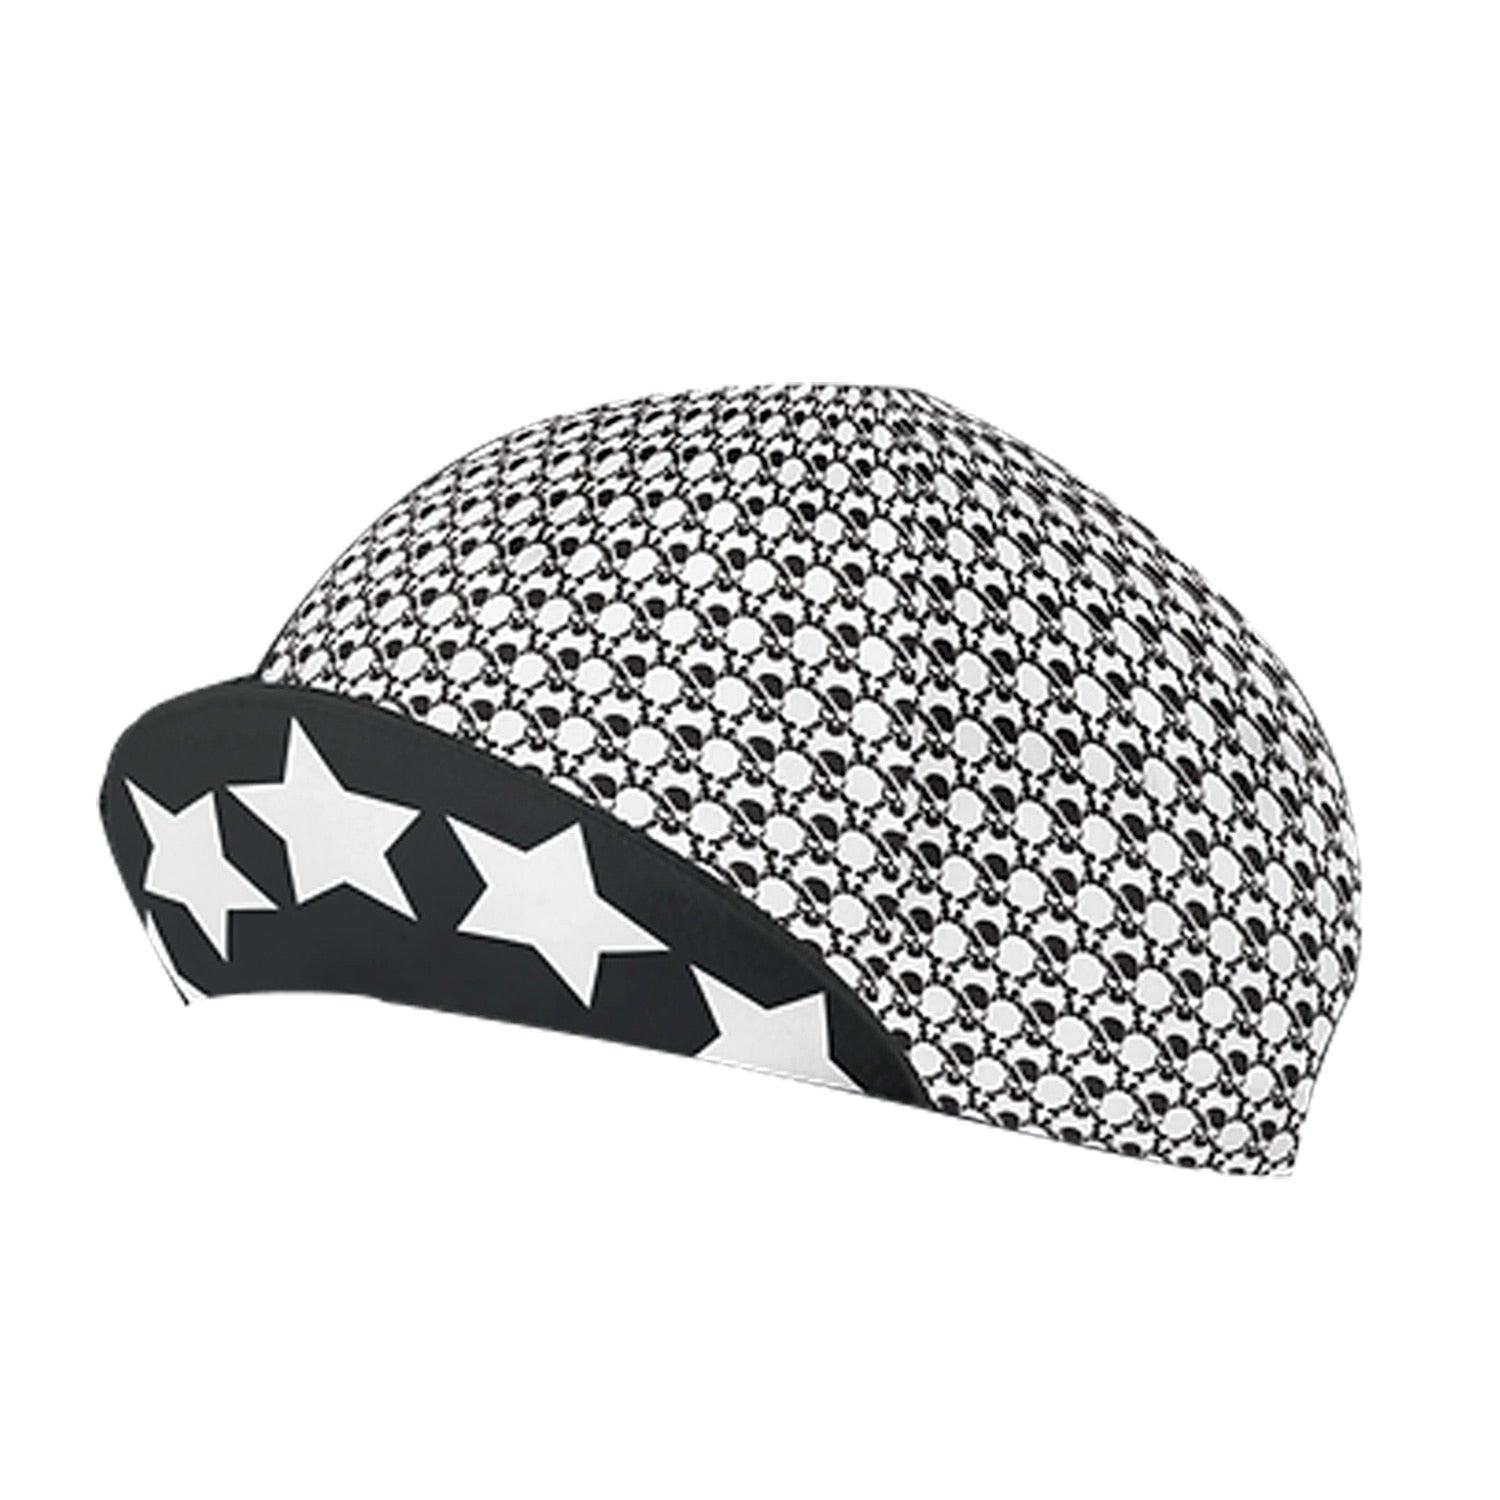 All Skulls Pentagram Black White Quick Dry Bicycle Men's Caps Sports Breathable Summer Balaclava Unisex Wear Cool Hat